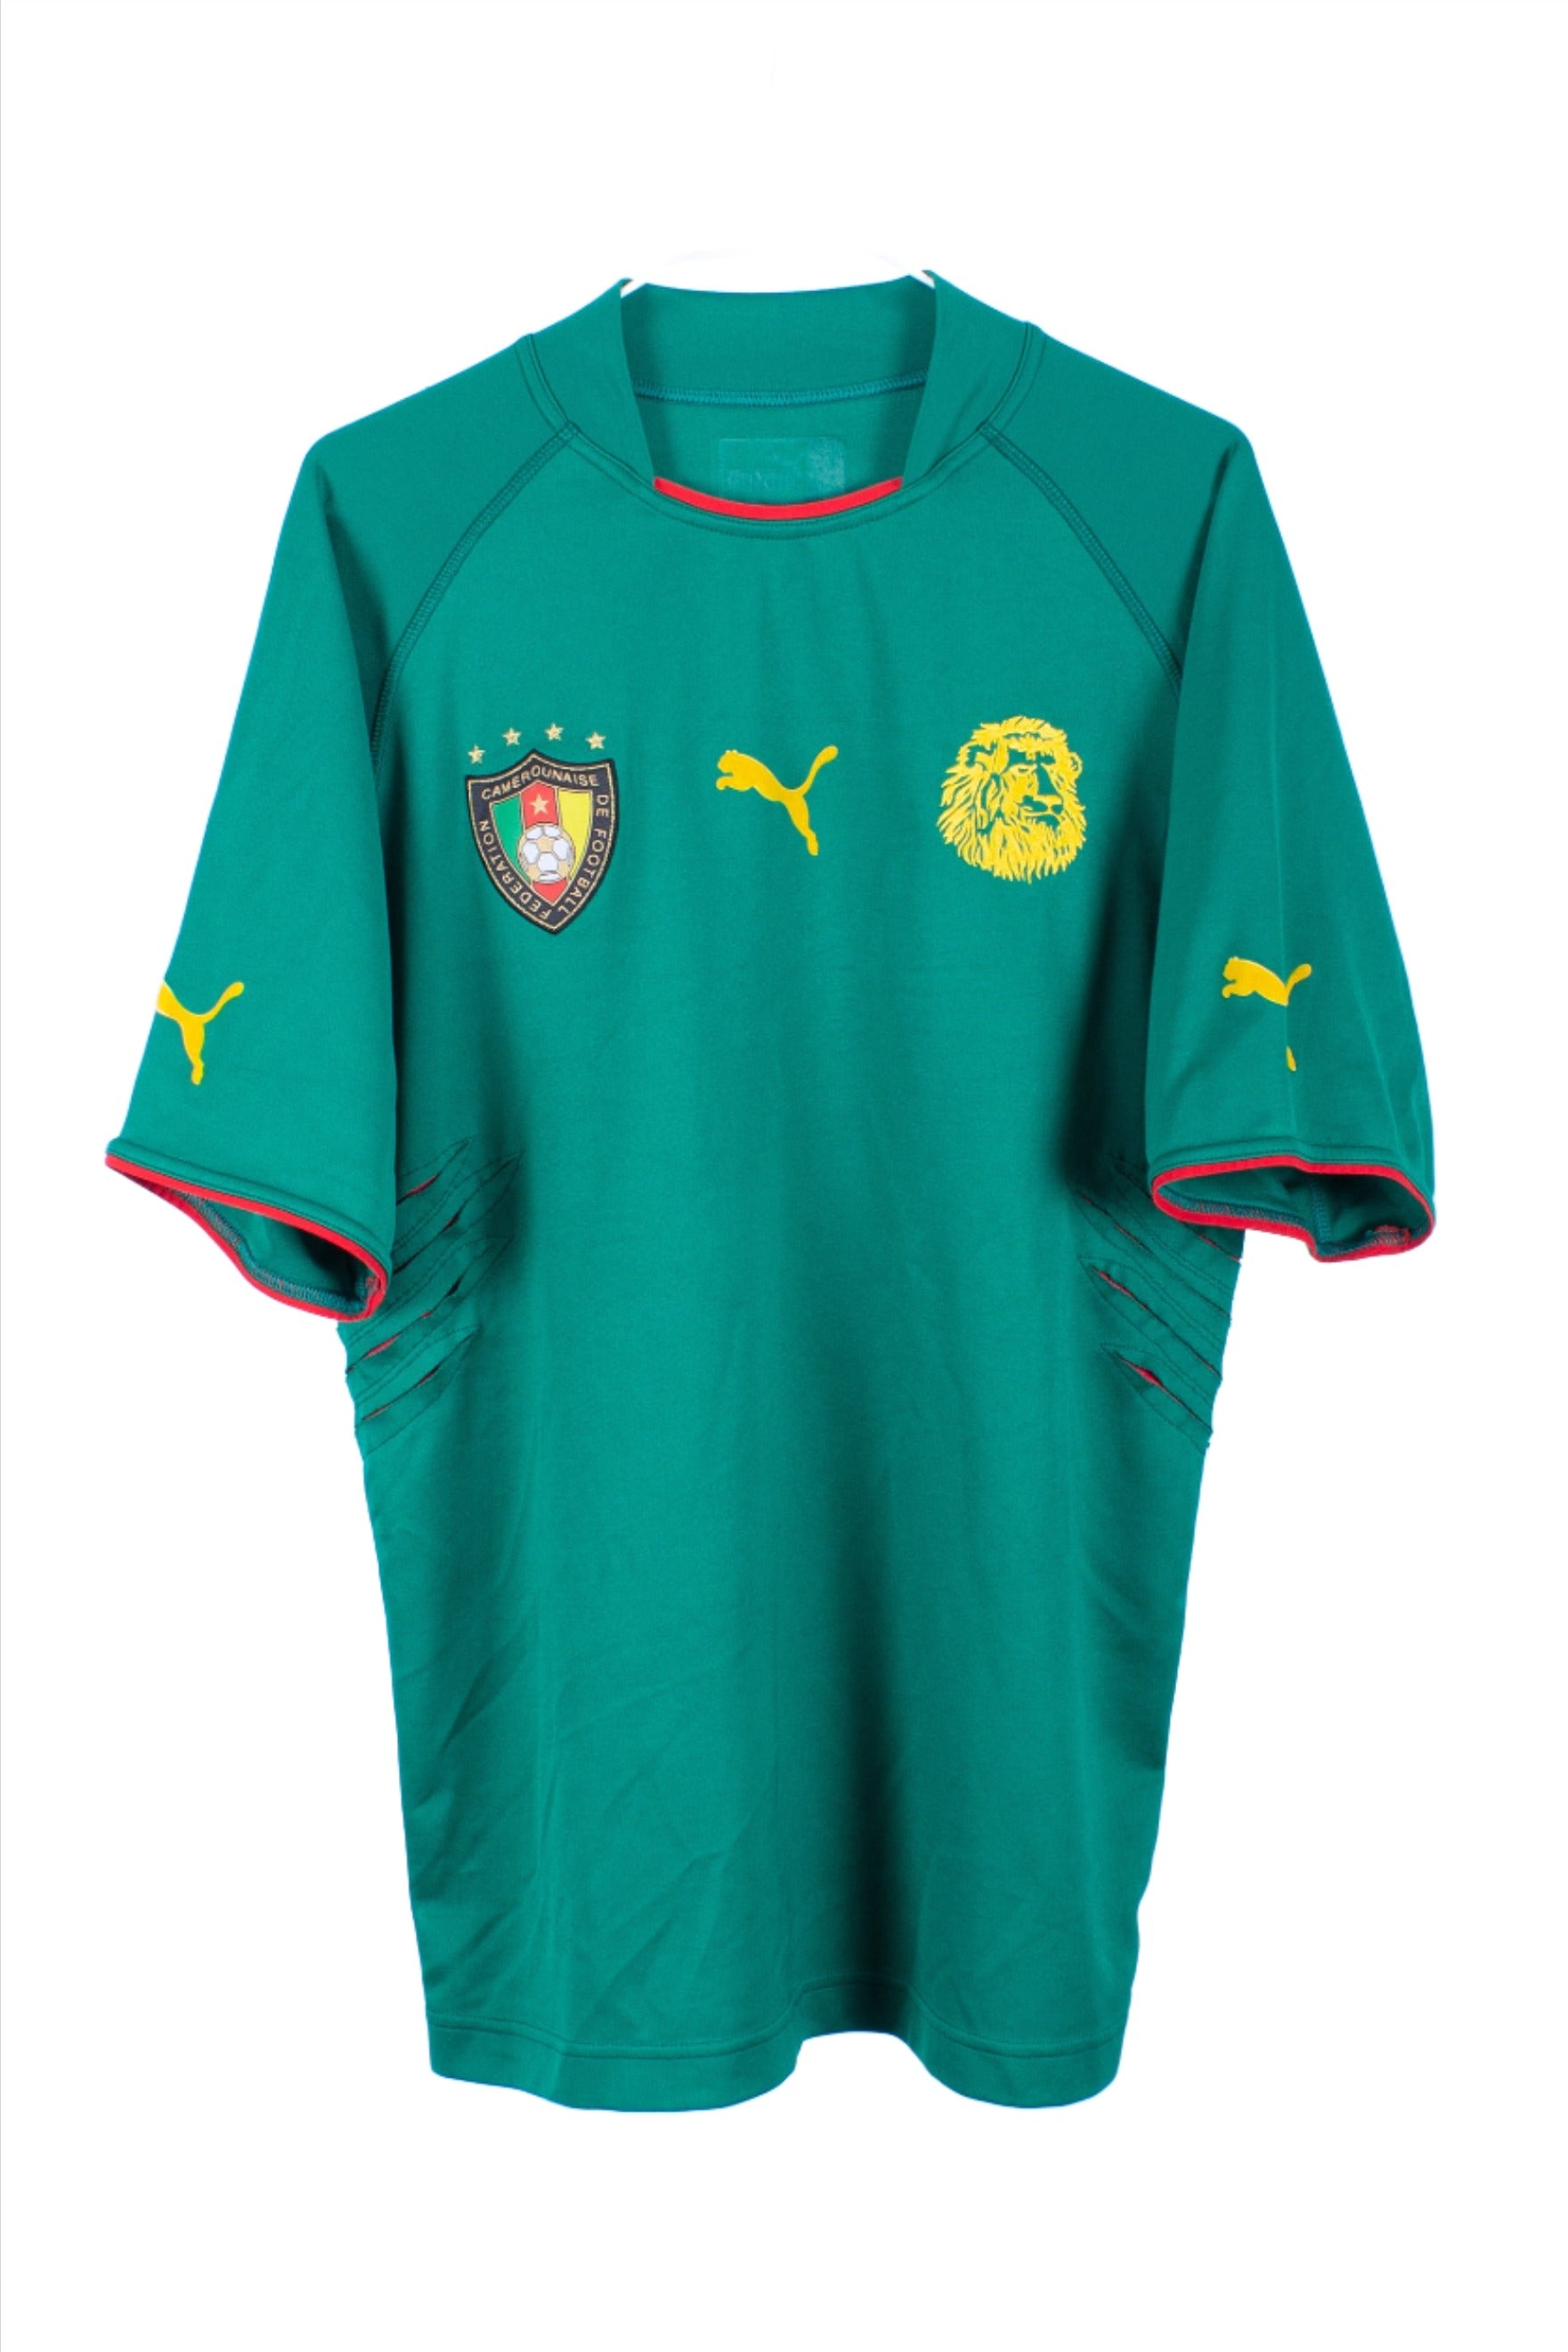 Cameroon 2004 Home Shirt